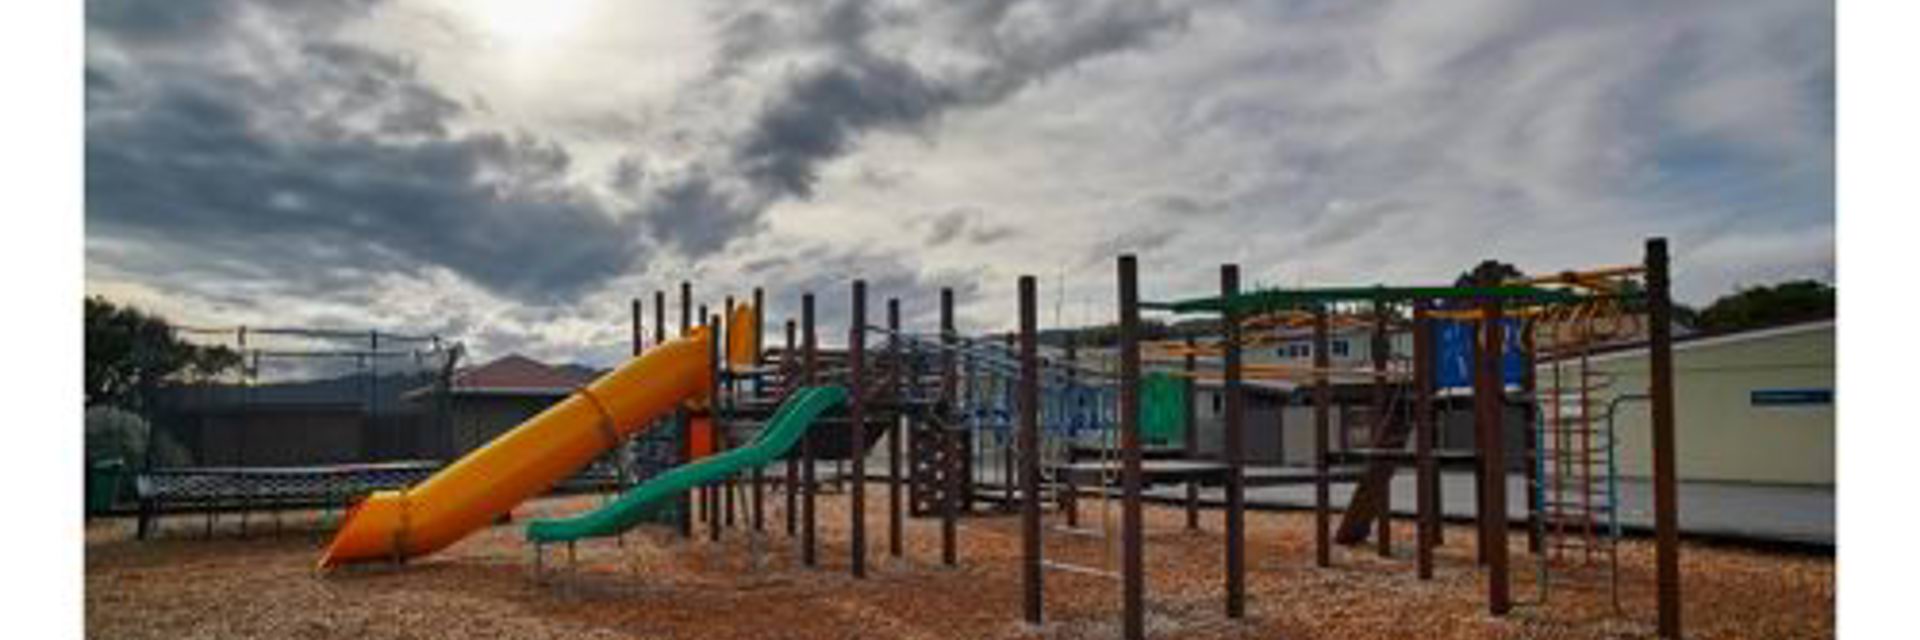 playground at Greymouth TOP 10